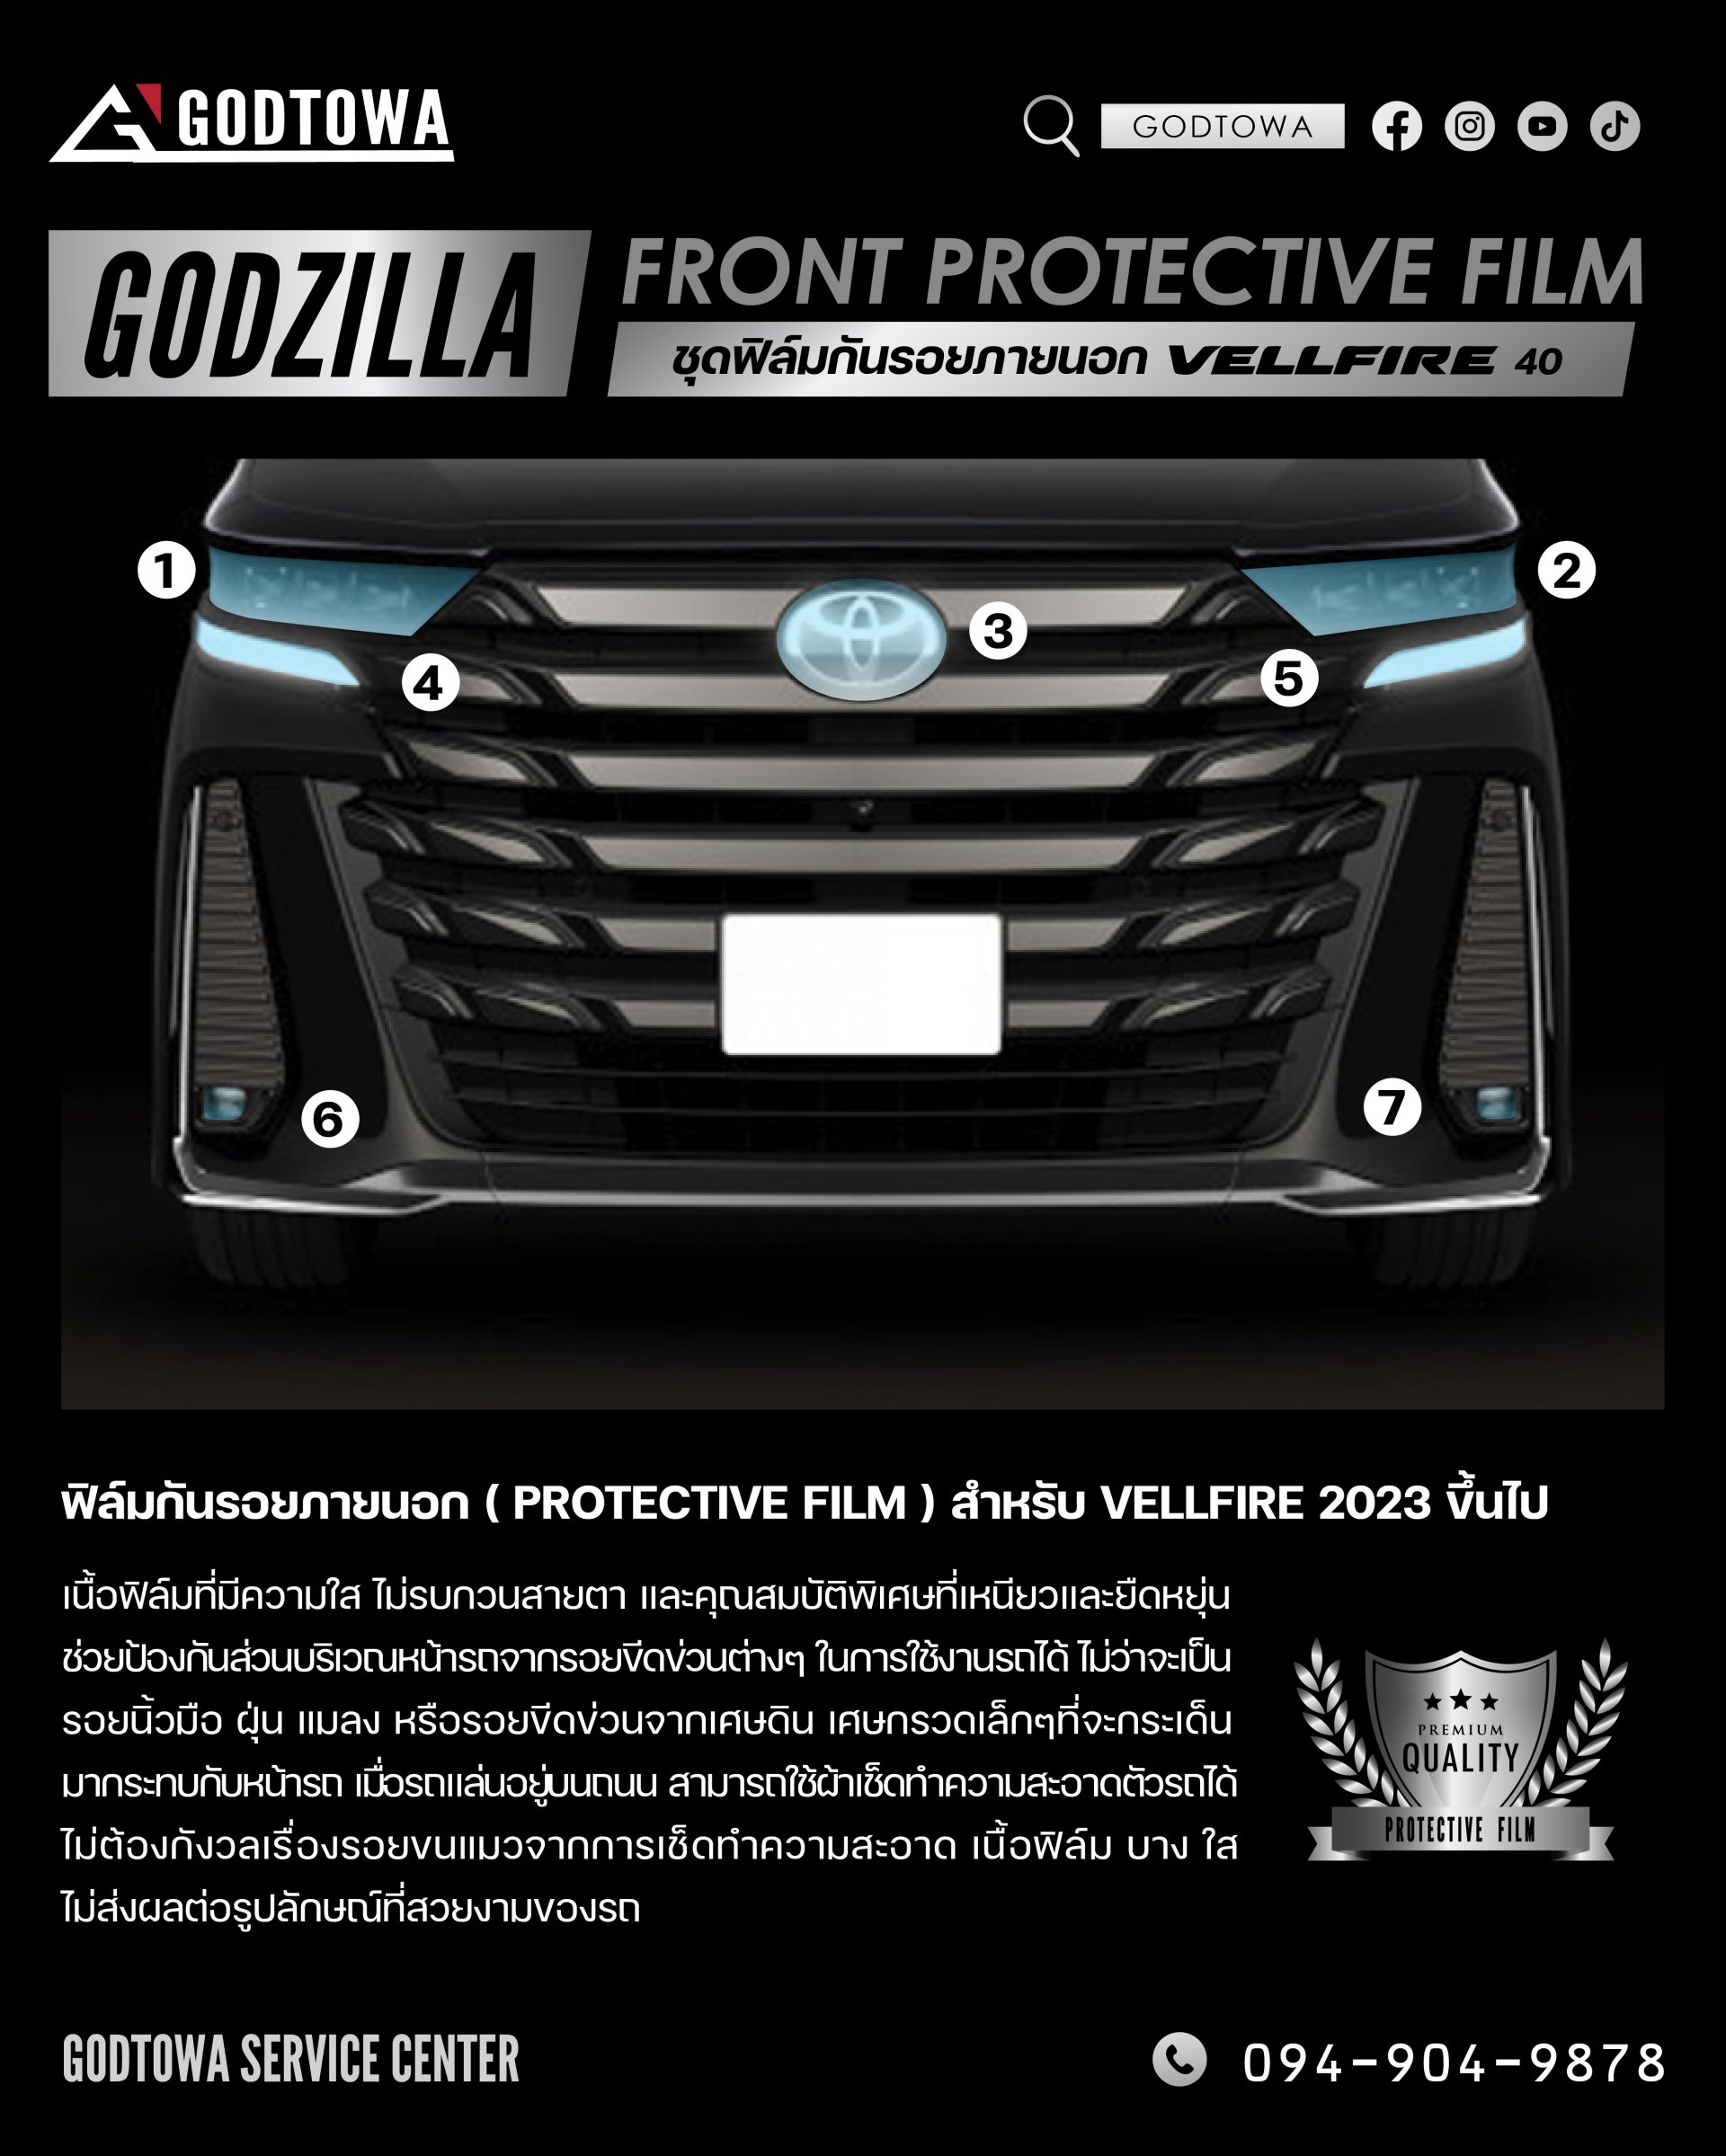 Protection Film ฟิล์มกันรอยชุดหน้า  สำหรับรถยนต์ Vellfire 40 รุ่นปี 2023 ขึ้นไป